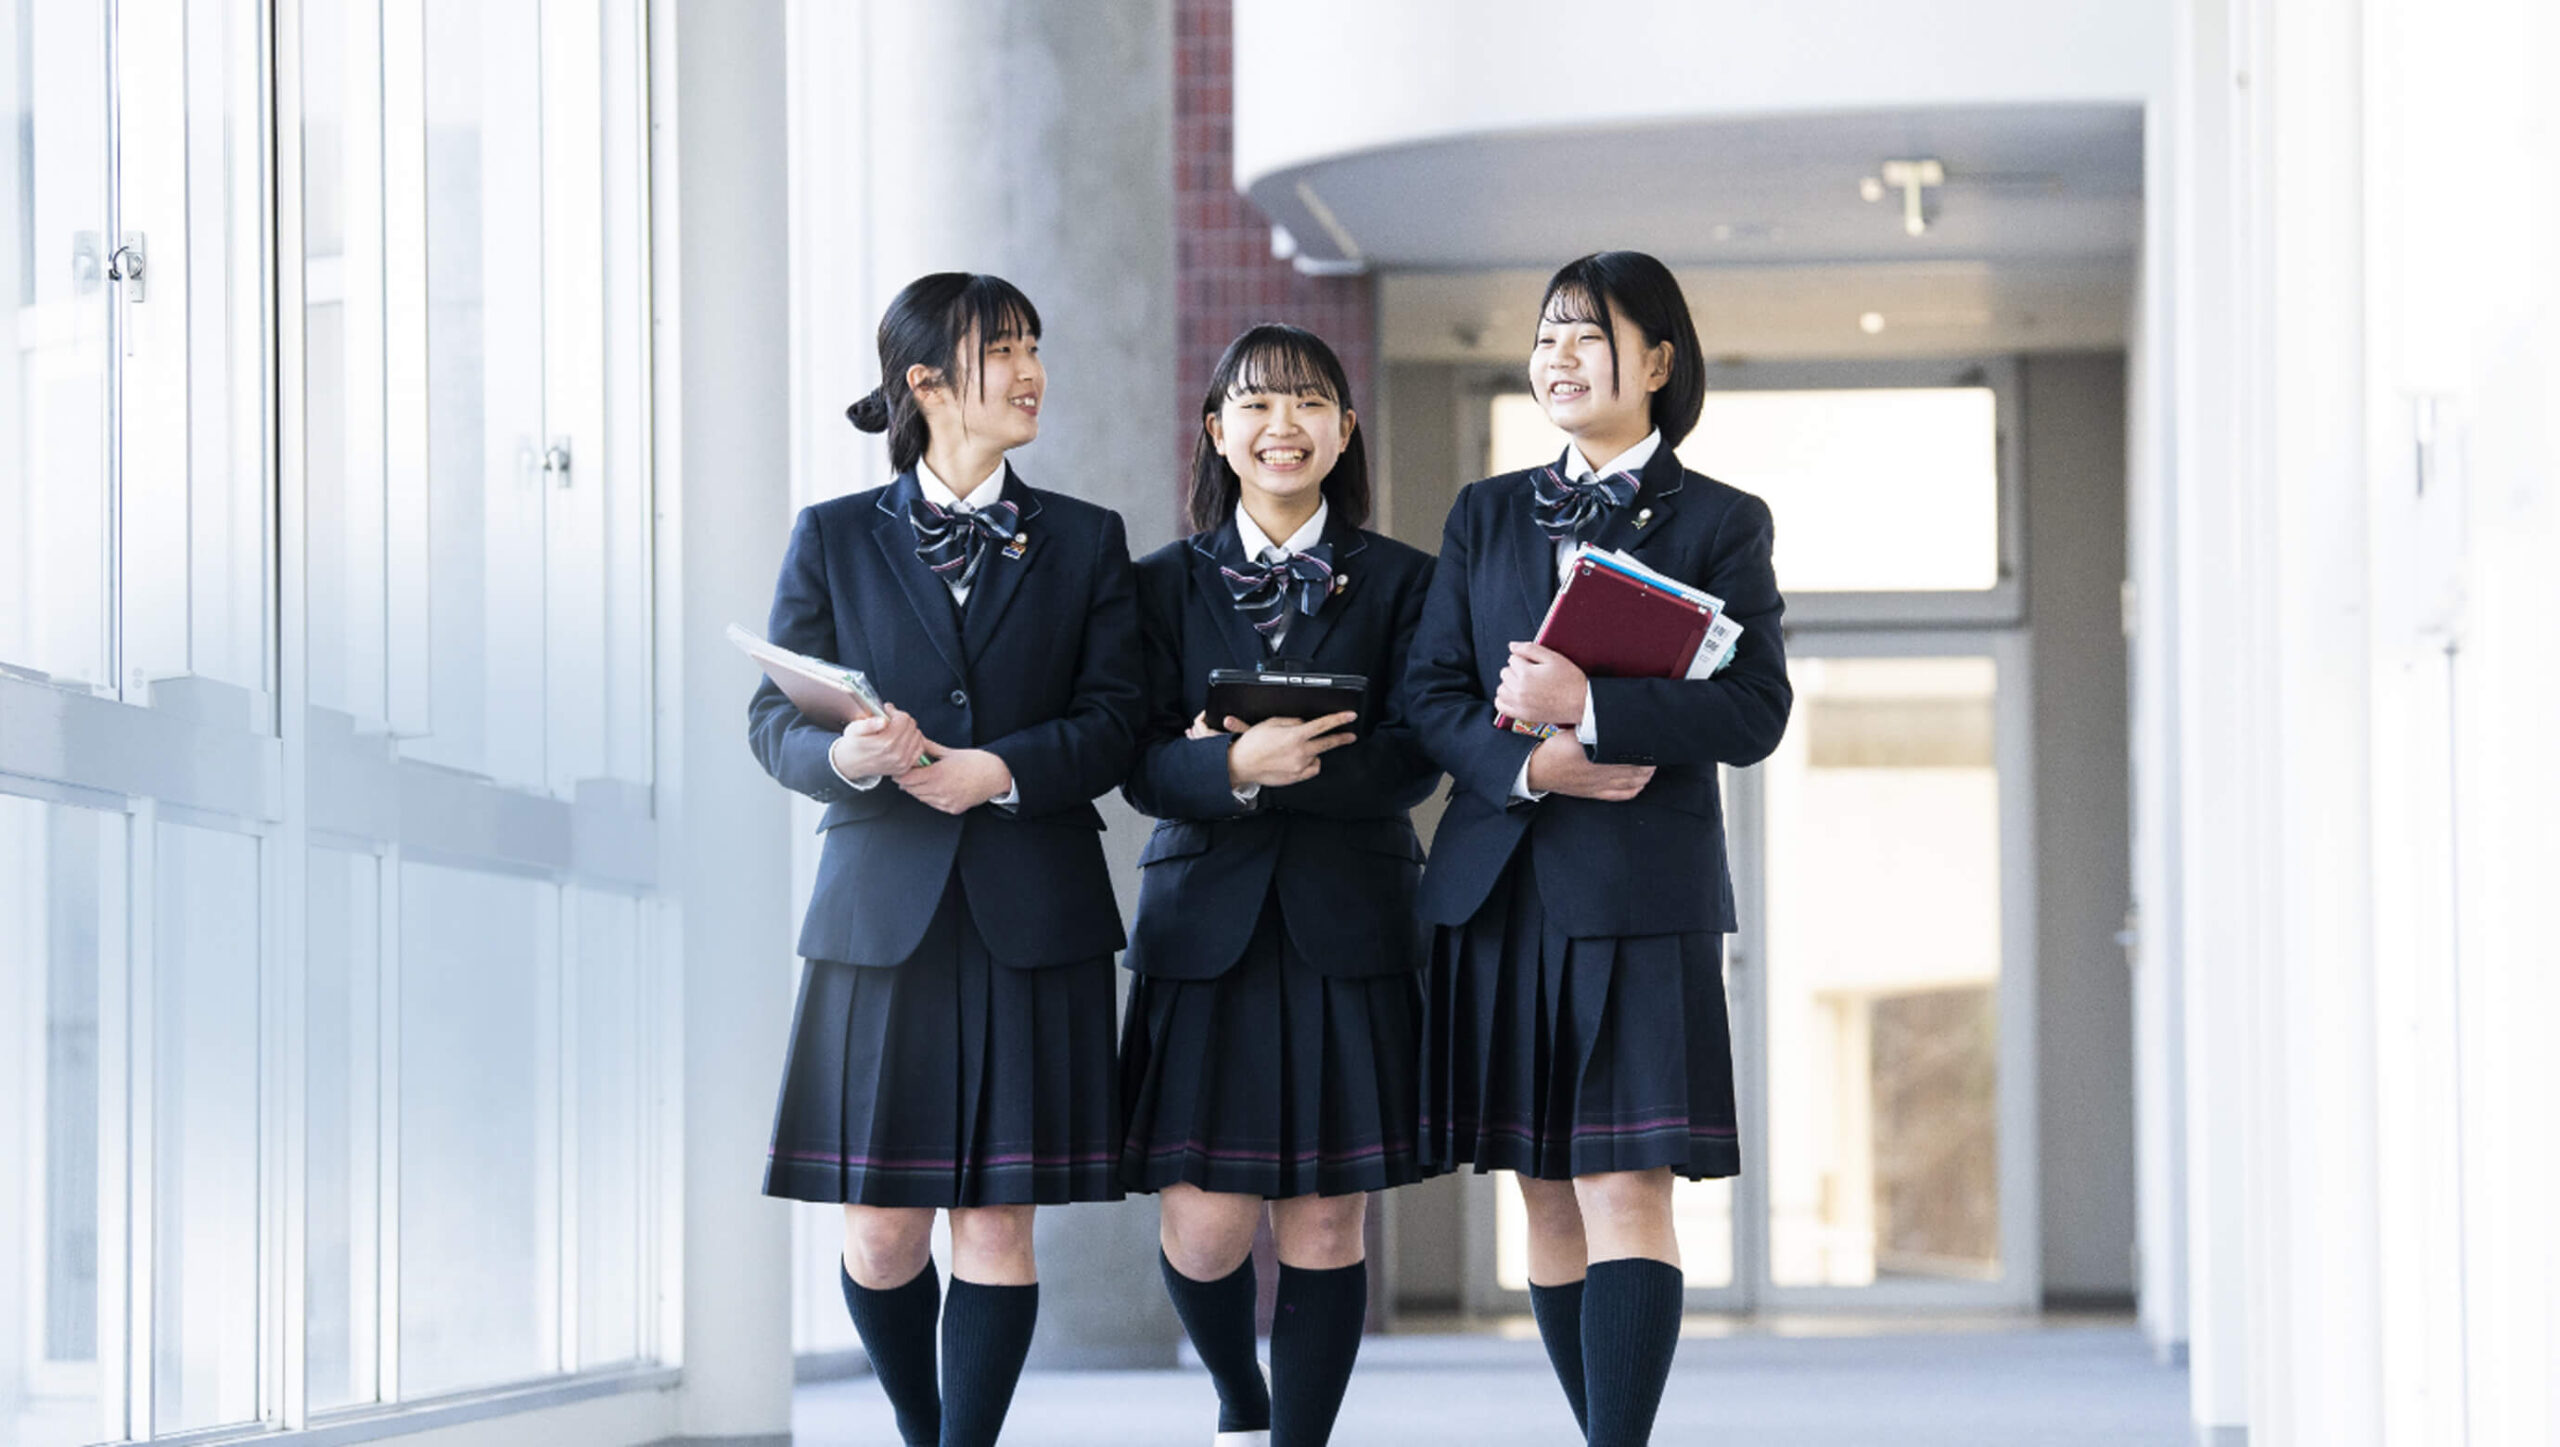 BUNKA
Girls’ High School